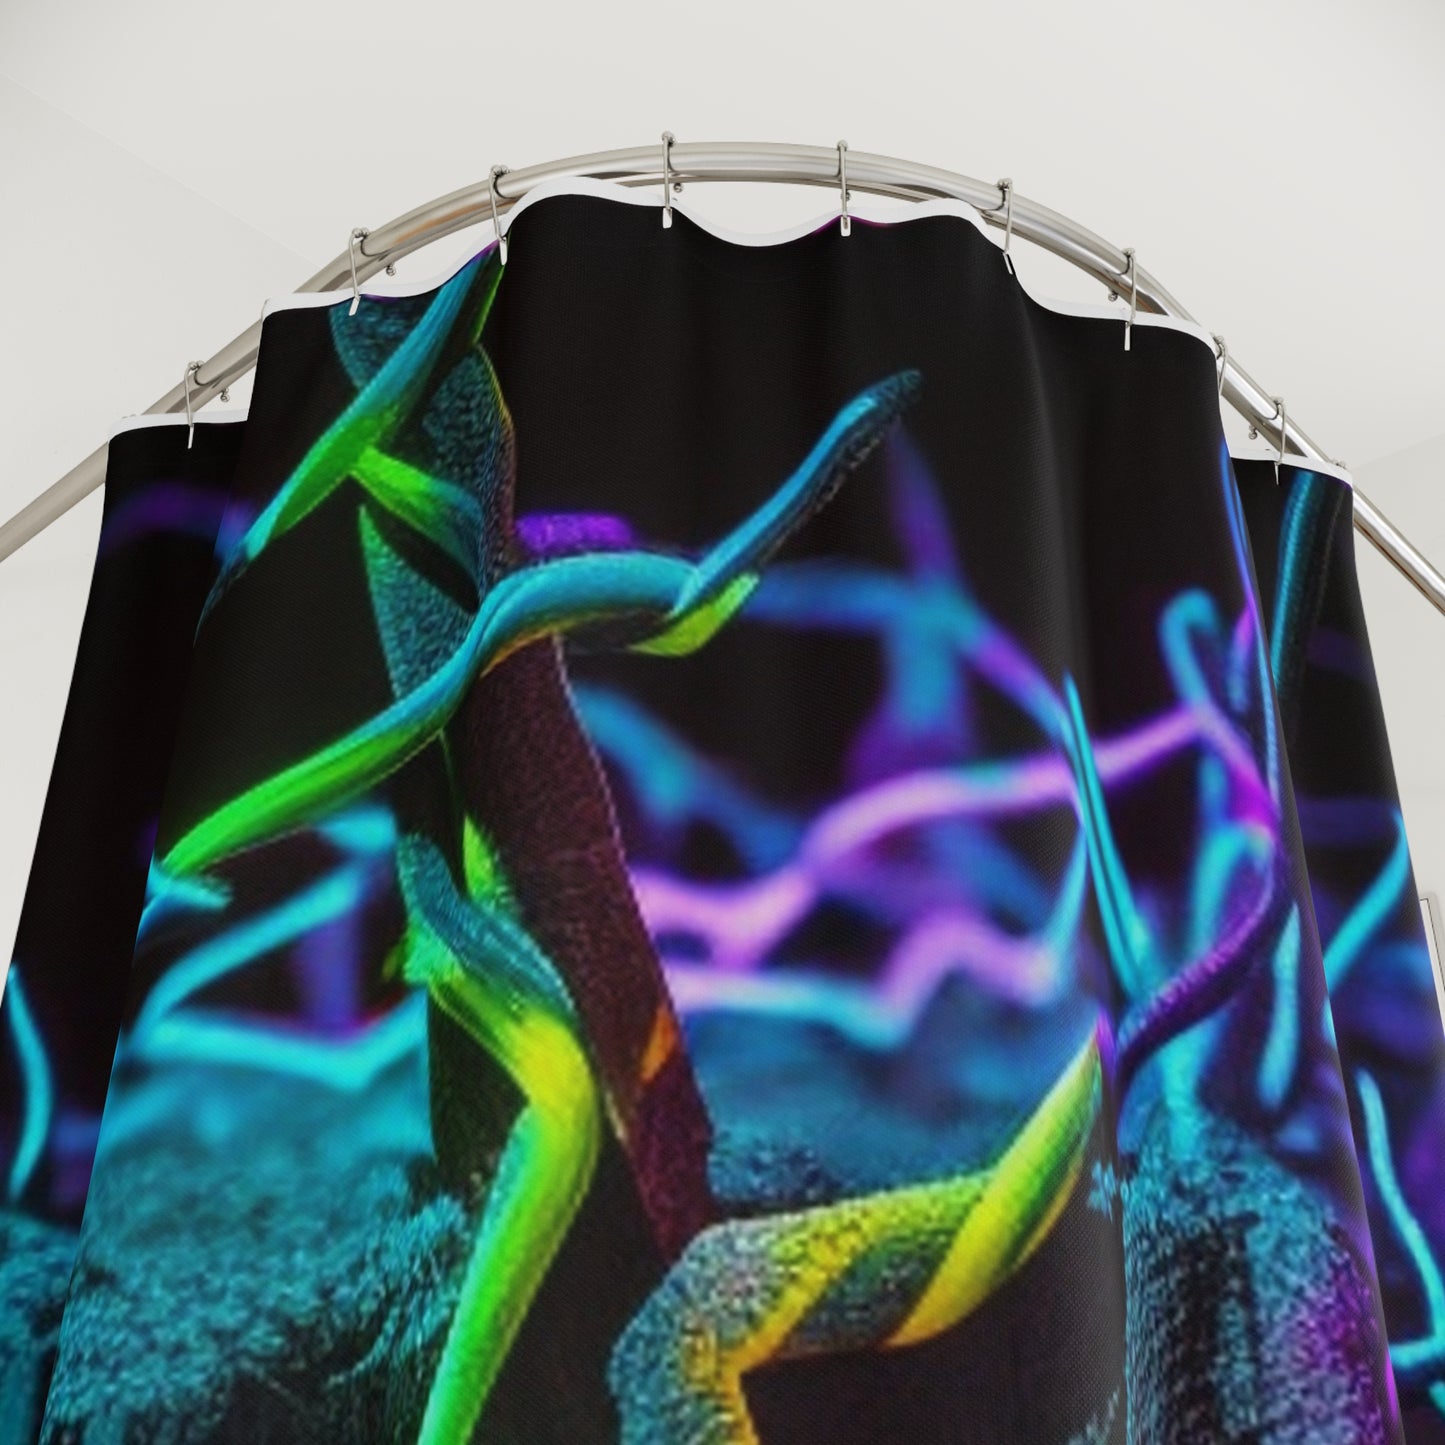 Polyester Shower Curtain Macro Neon Barbs 3